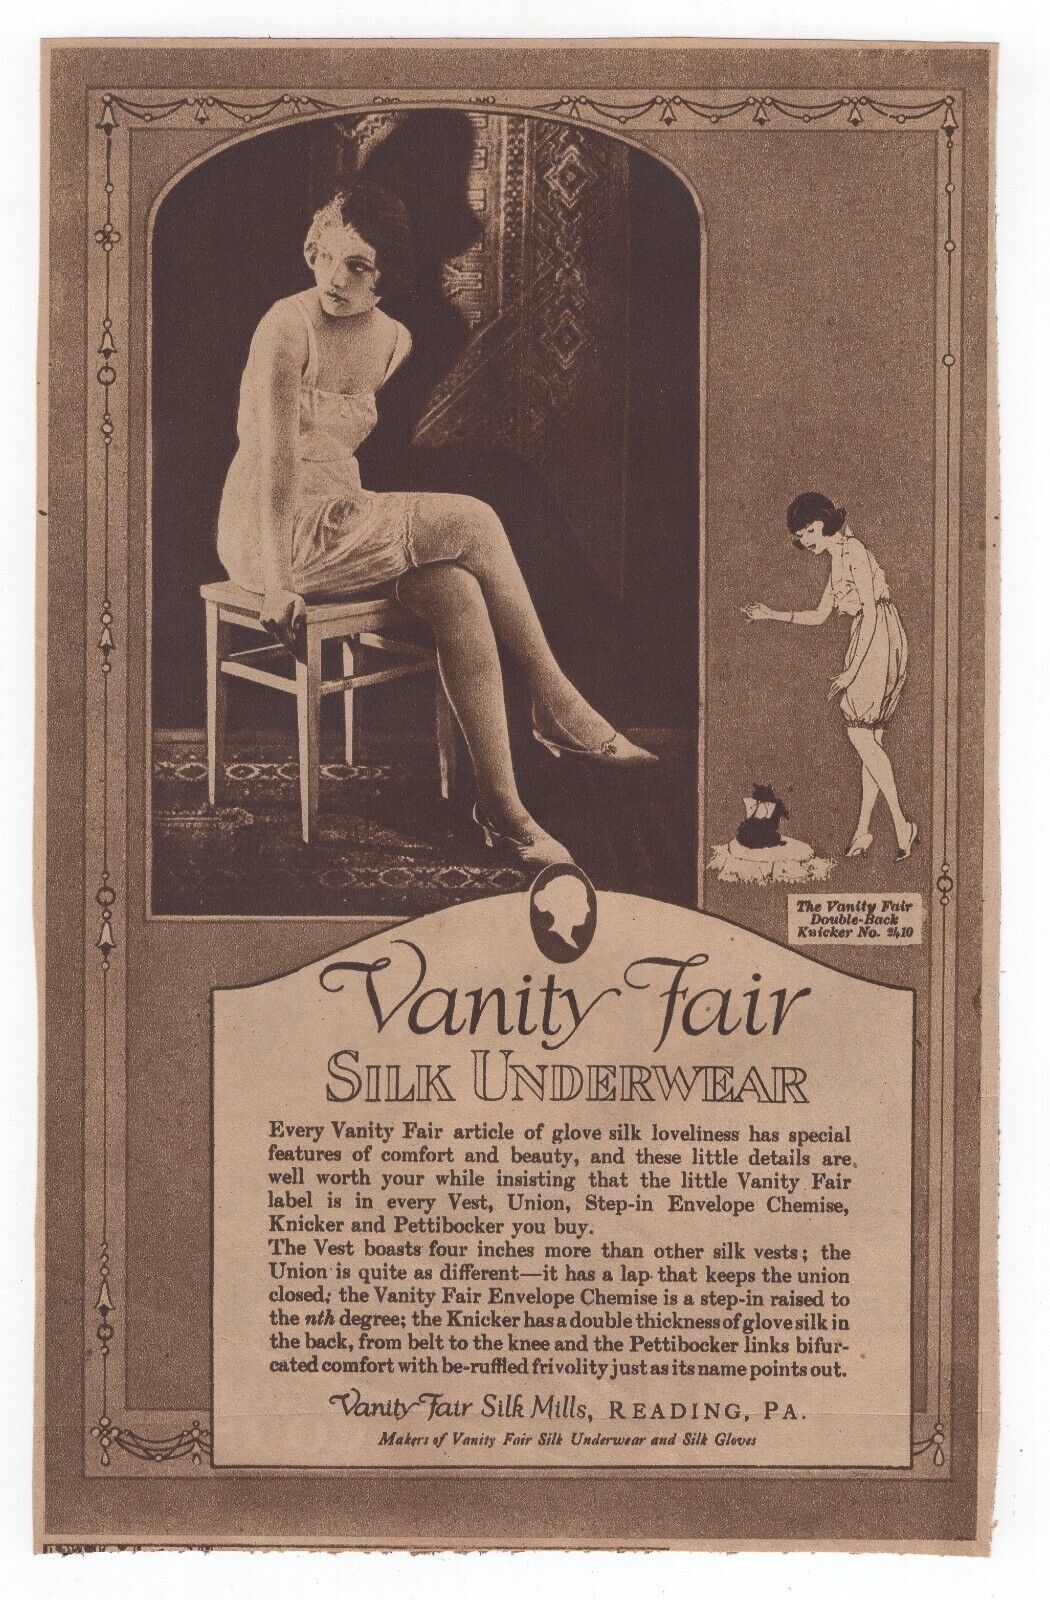 1920 Vanity Fair Reading, Pa. Silk Ad